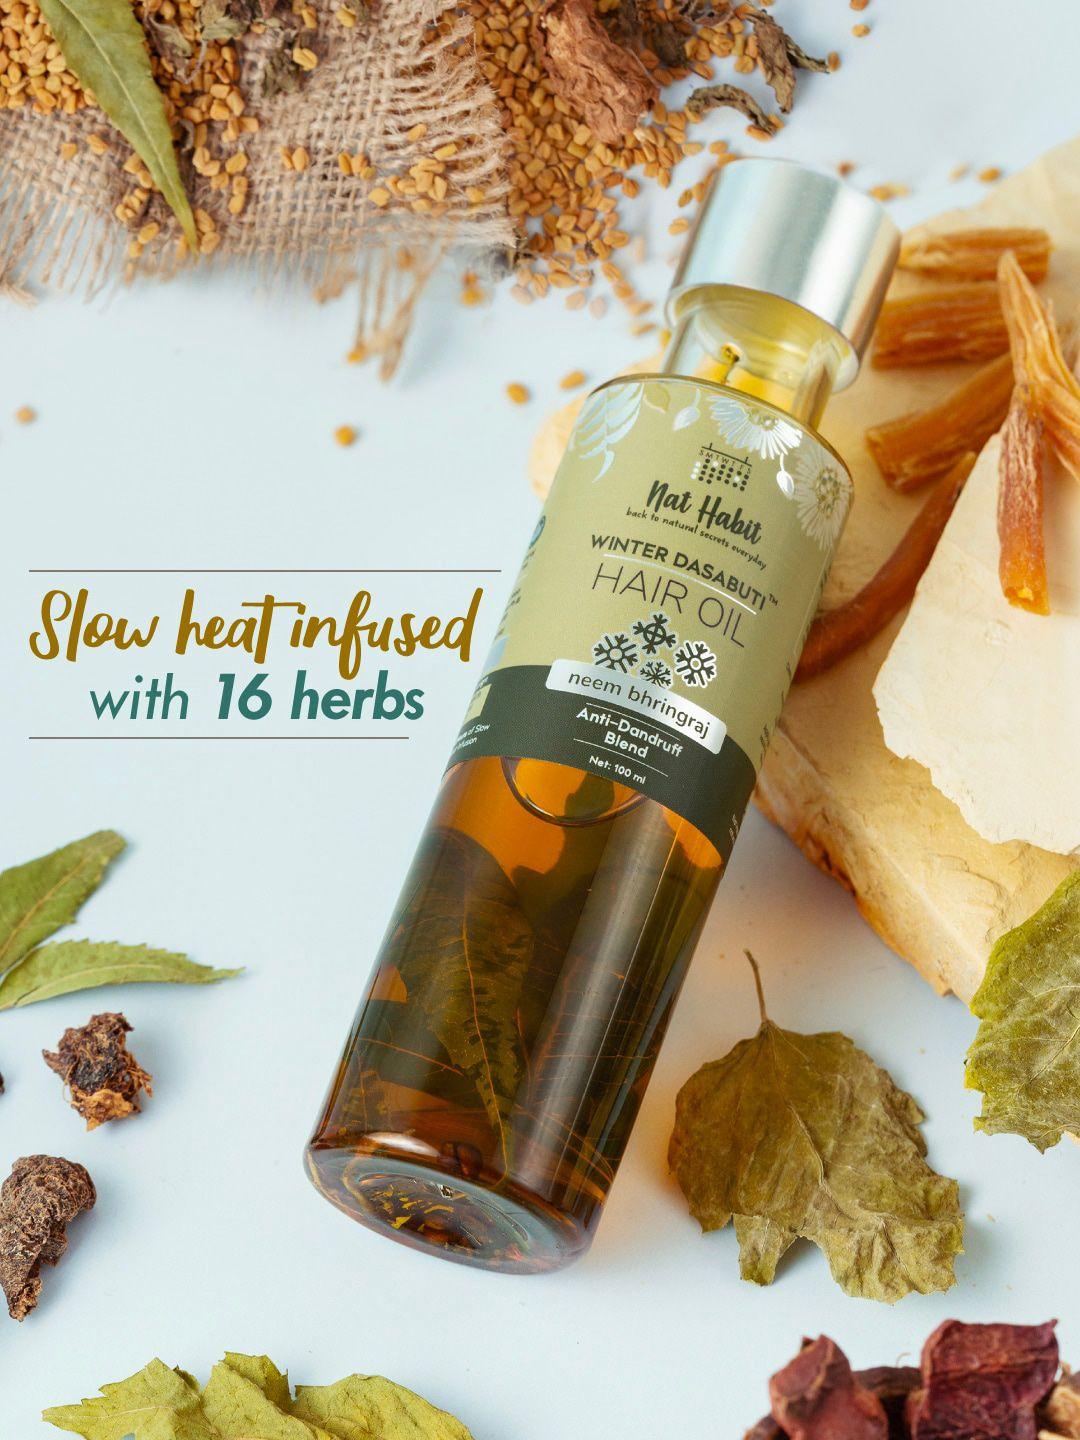 nat-habit-neem-bhringraj-winter-dasabuti-hair-oil-for-anti-dandruff---100-ml